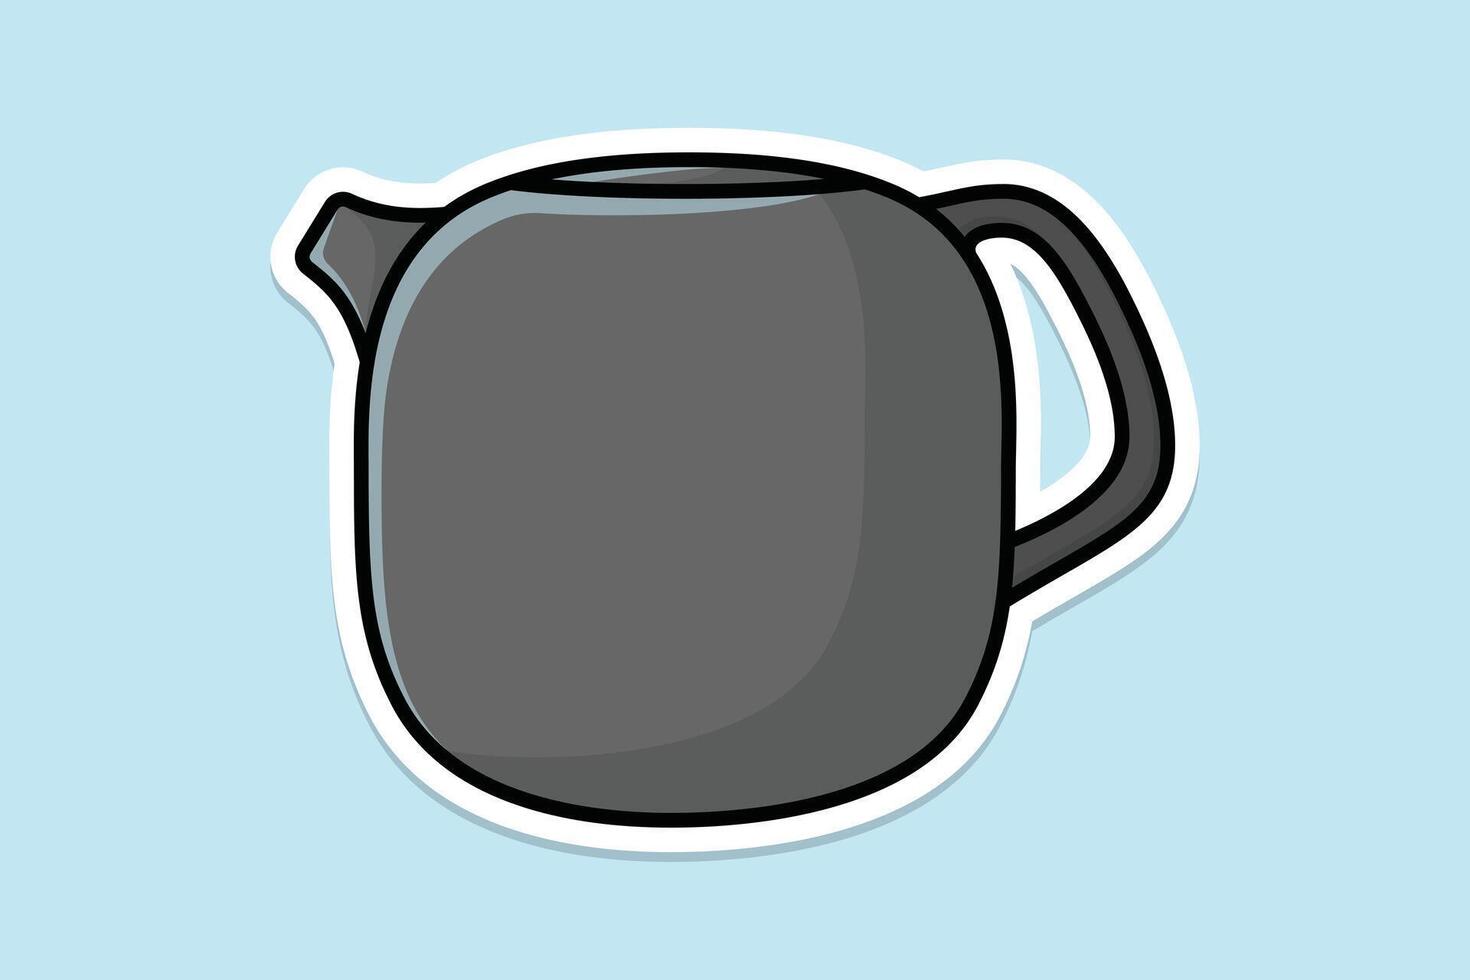 Round Shape Tea Kettle sticker design vector illustration. Kitchen interior object icon concept. Kitchen Kettle with closed lid sticker design with shadow.